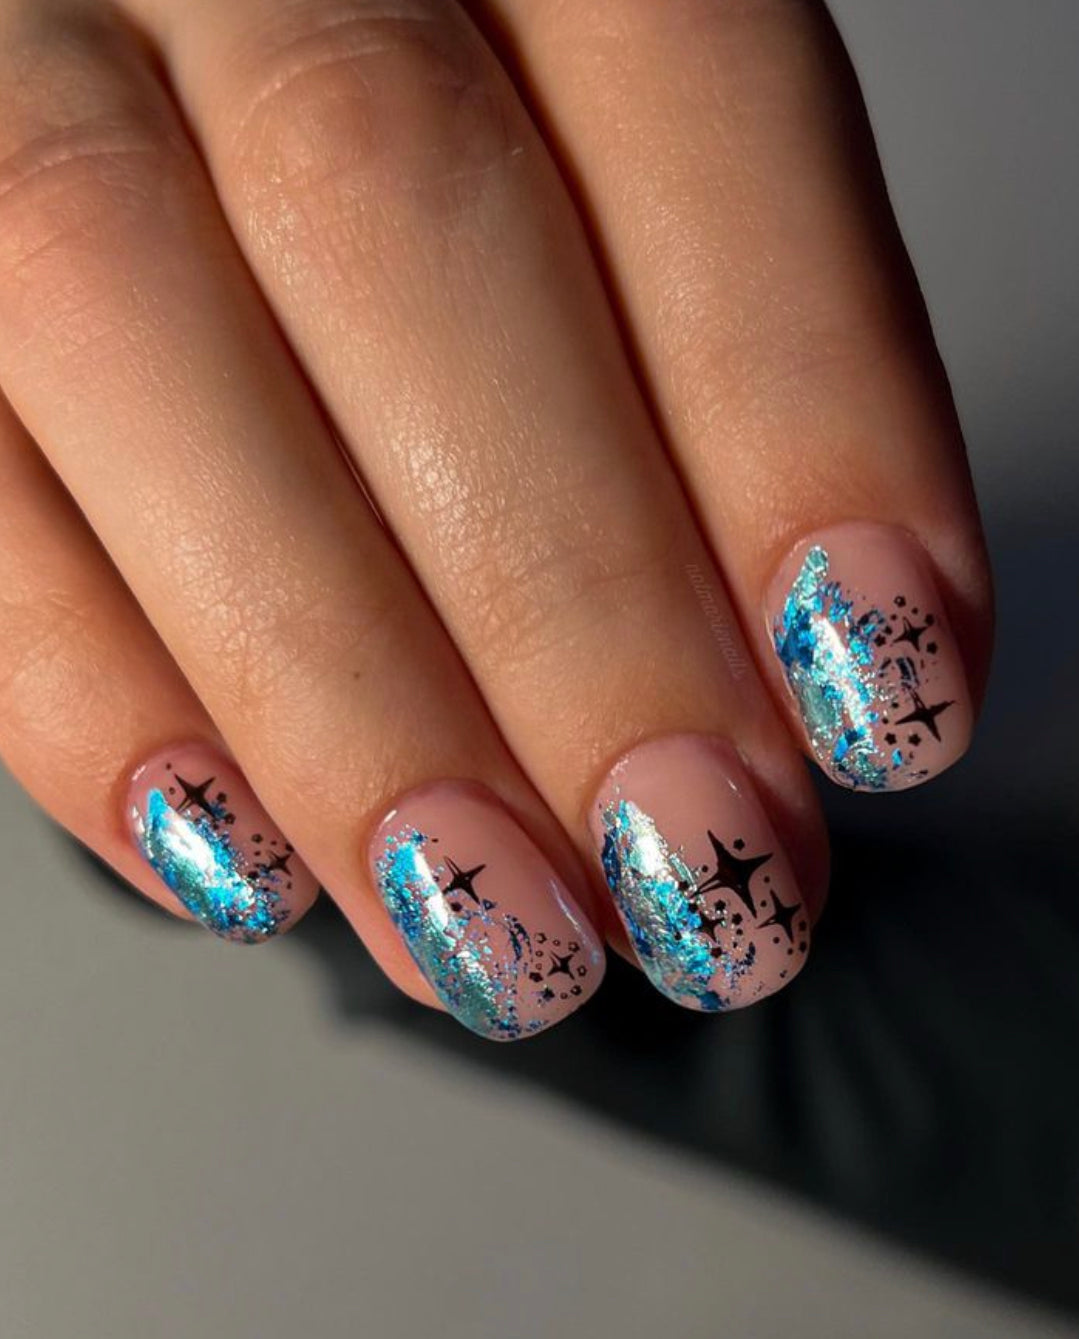 Nails By @natmarienails using metallic Ice Blue foil & Shattered Azure Blue foil